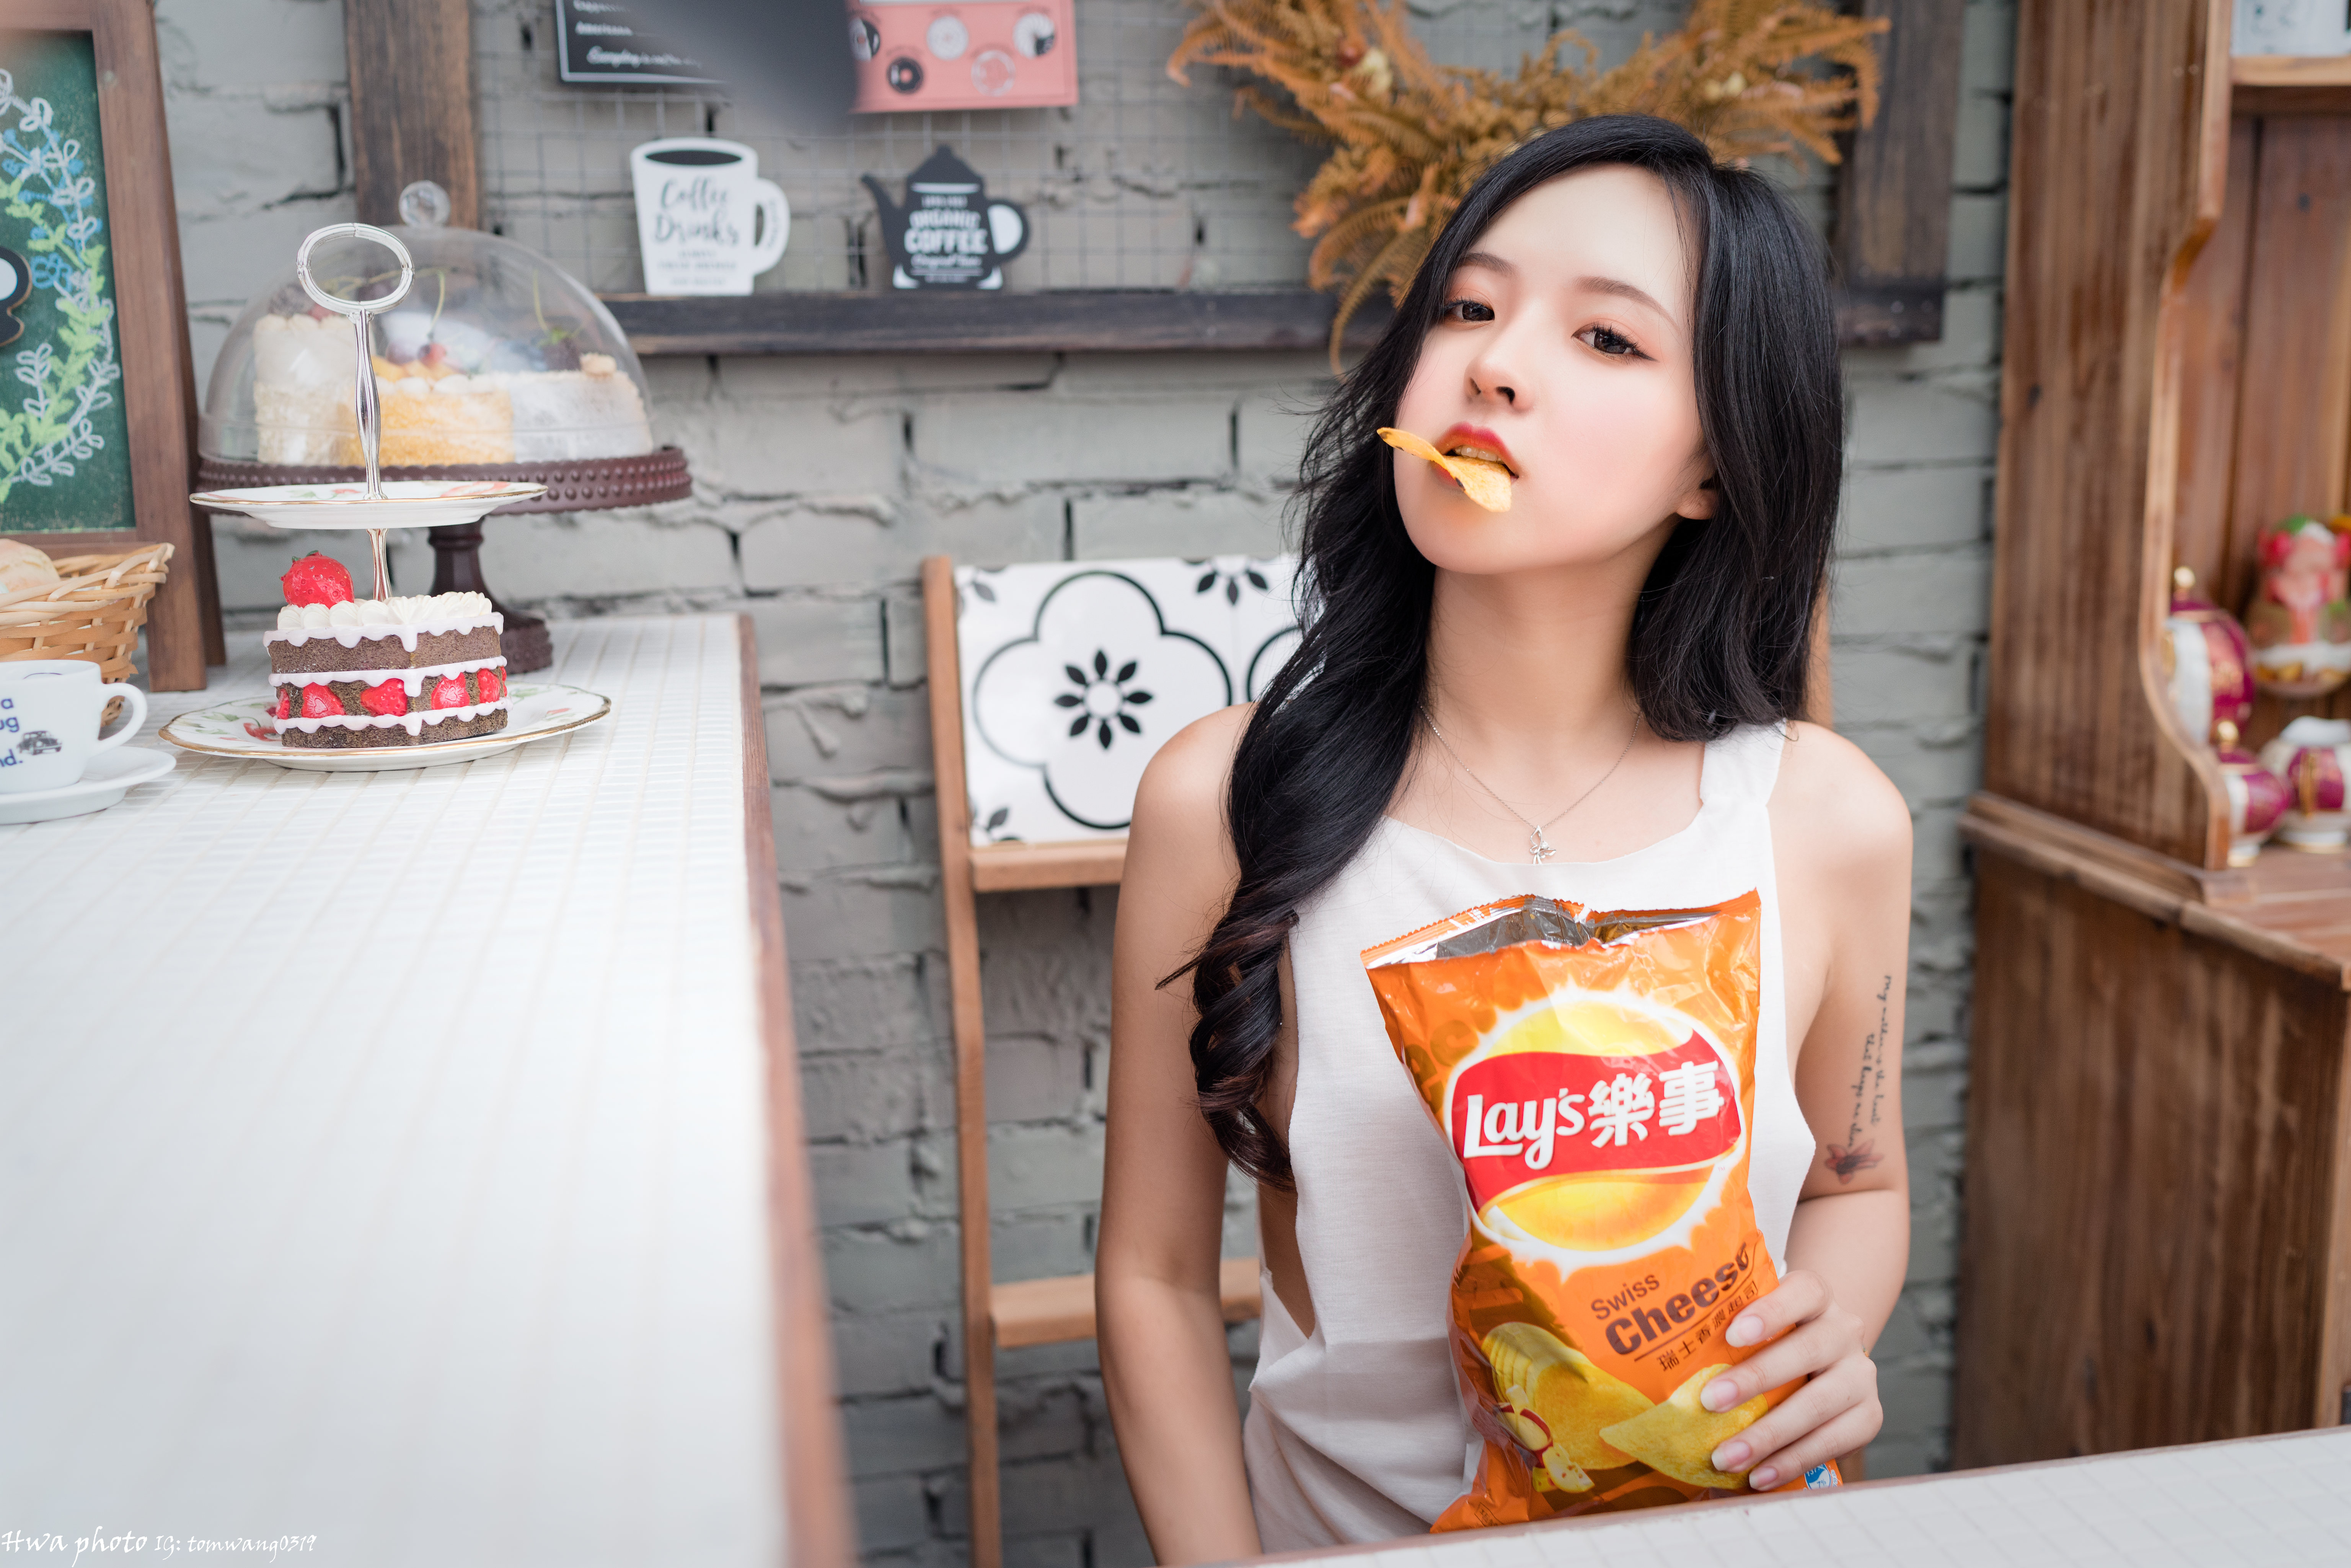 People 6144x4098 Asian women model long hair black hair eating potato chips cake cupboard signs sitting table snacks